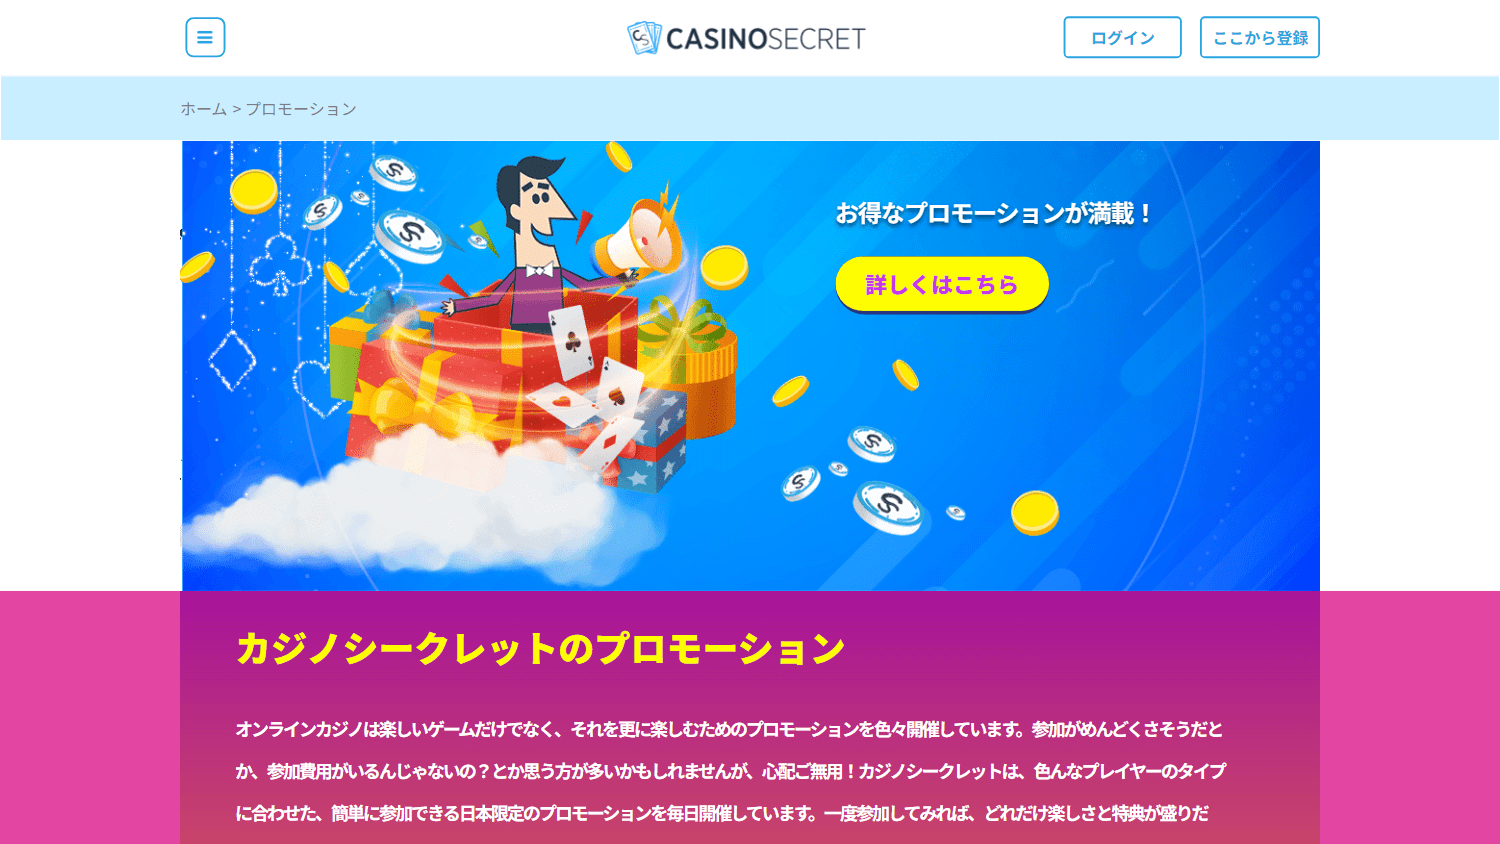 casinosecret_promotions_desktop